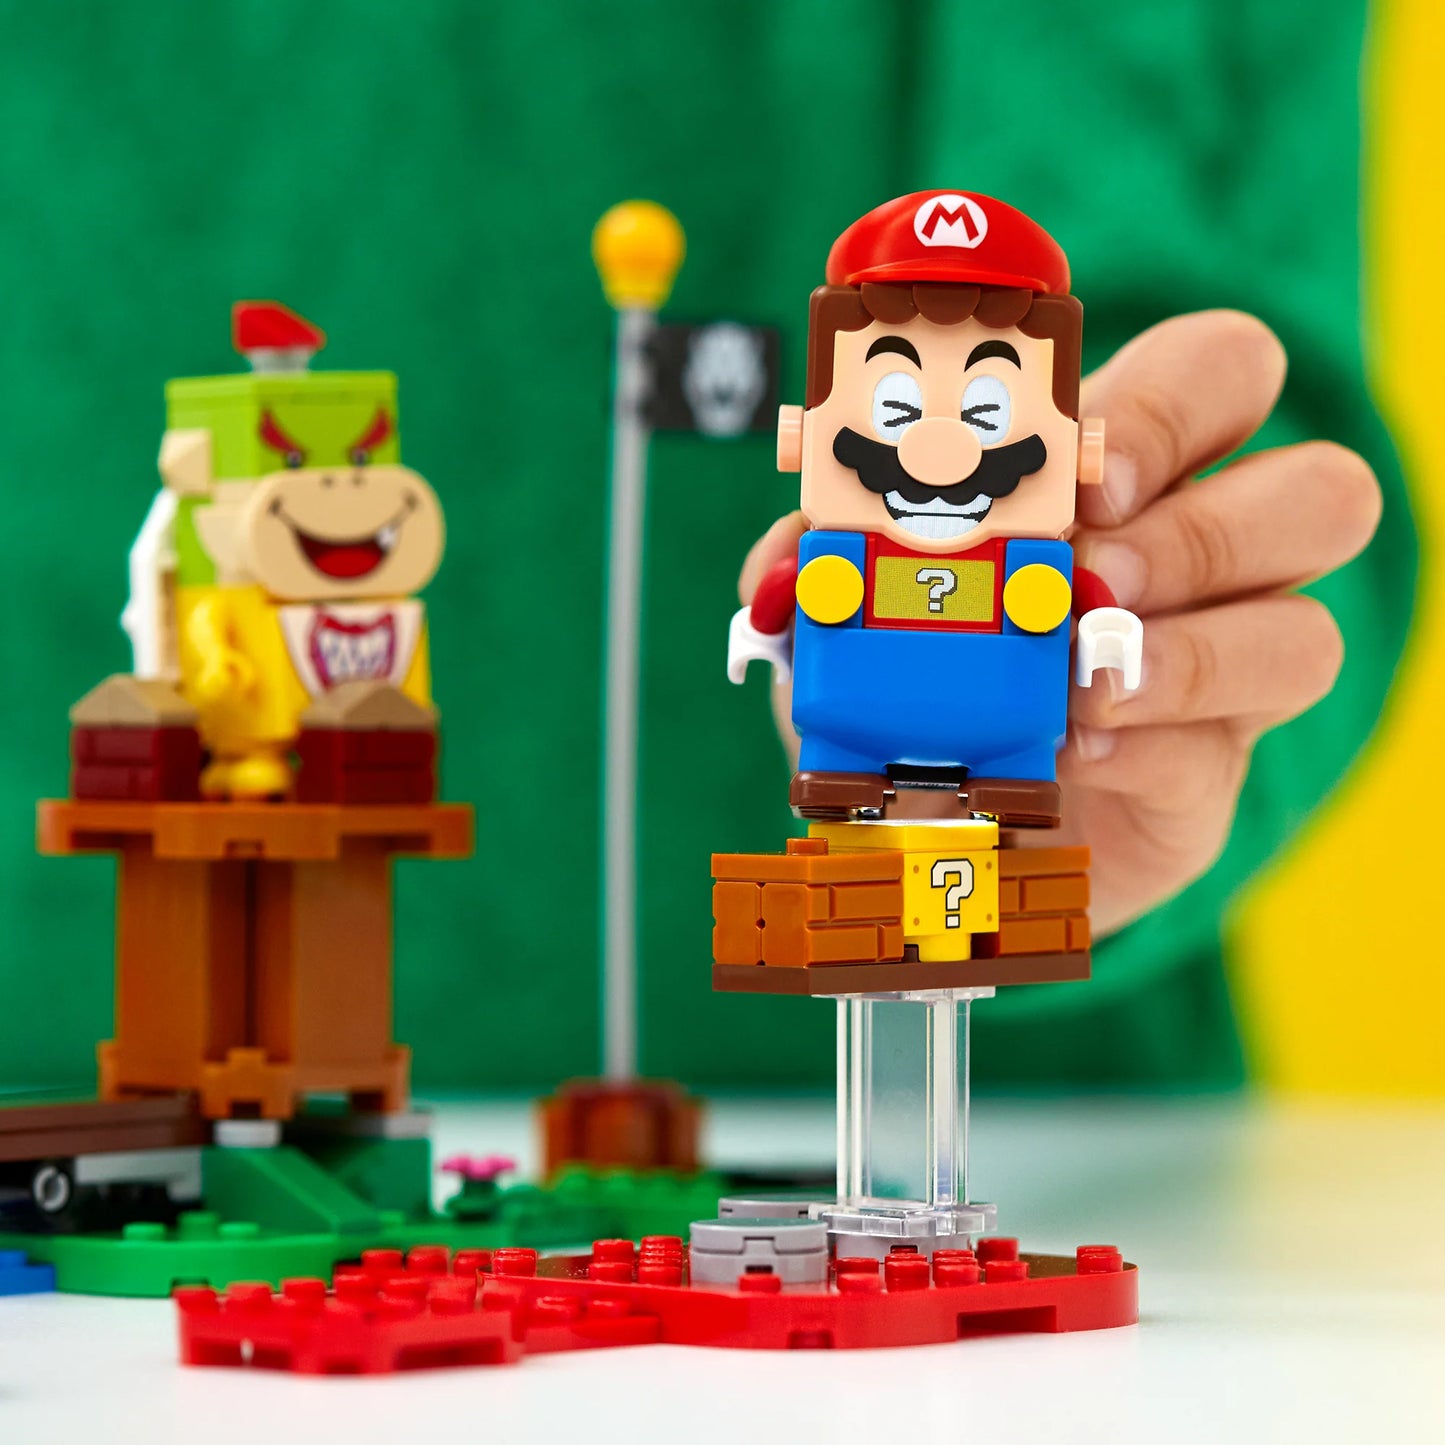 Adventures with Mario starter set - LEGO Super Mario